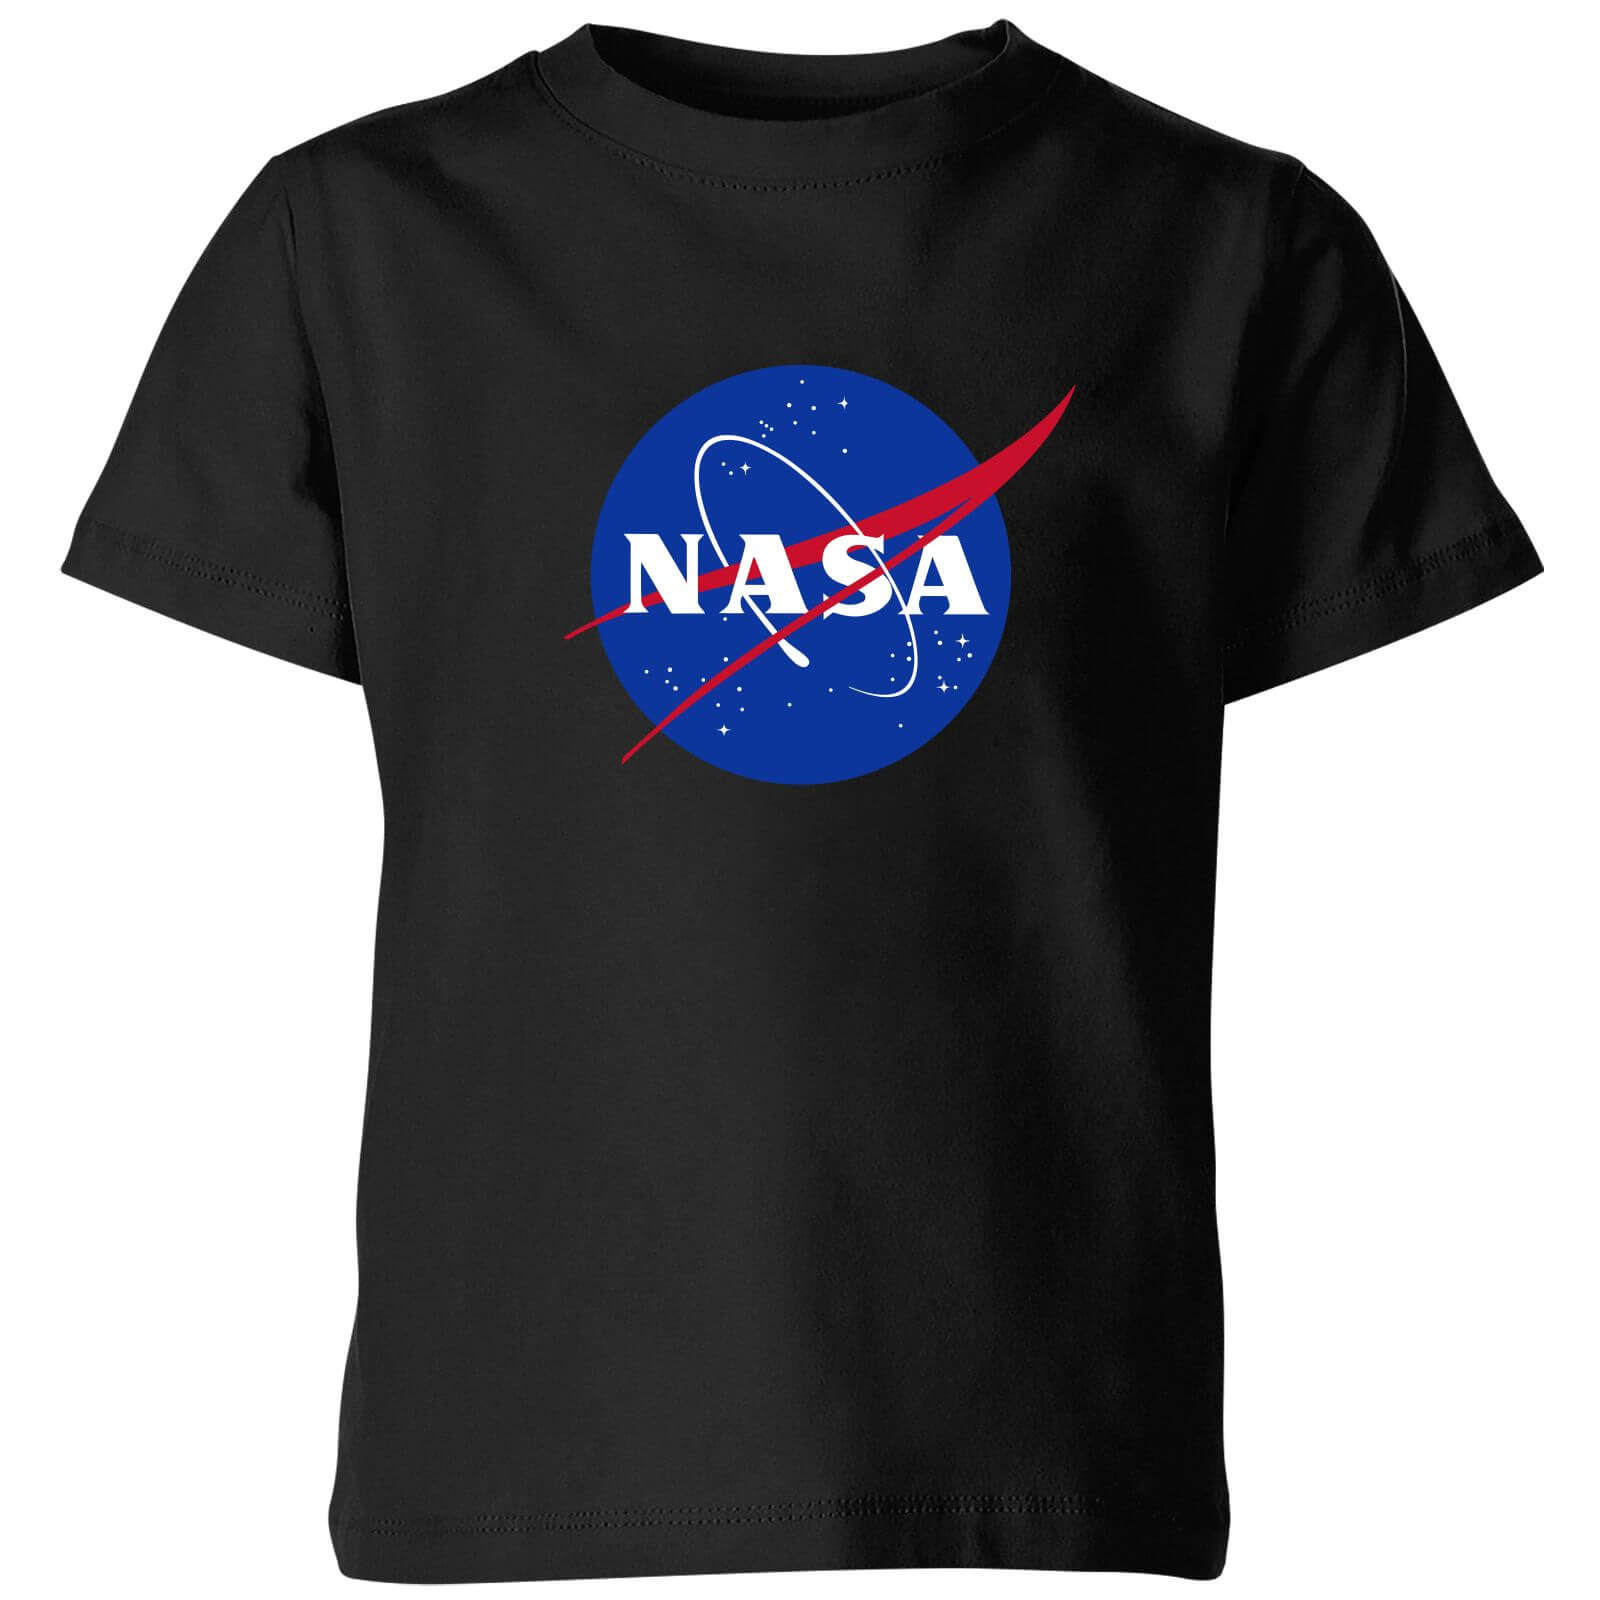 NASA Logo Insignia Kids' T-Shirt - Black - 9-10 Years - Black